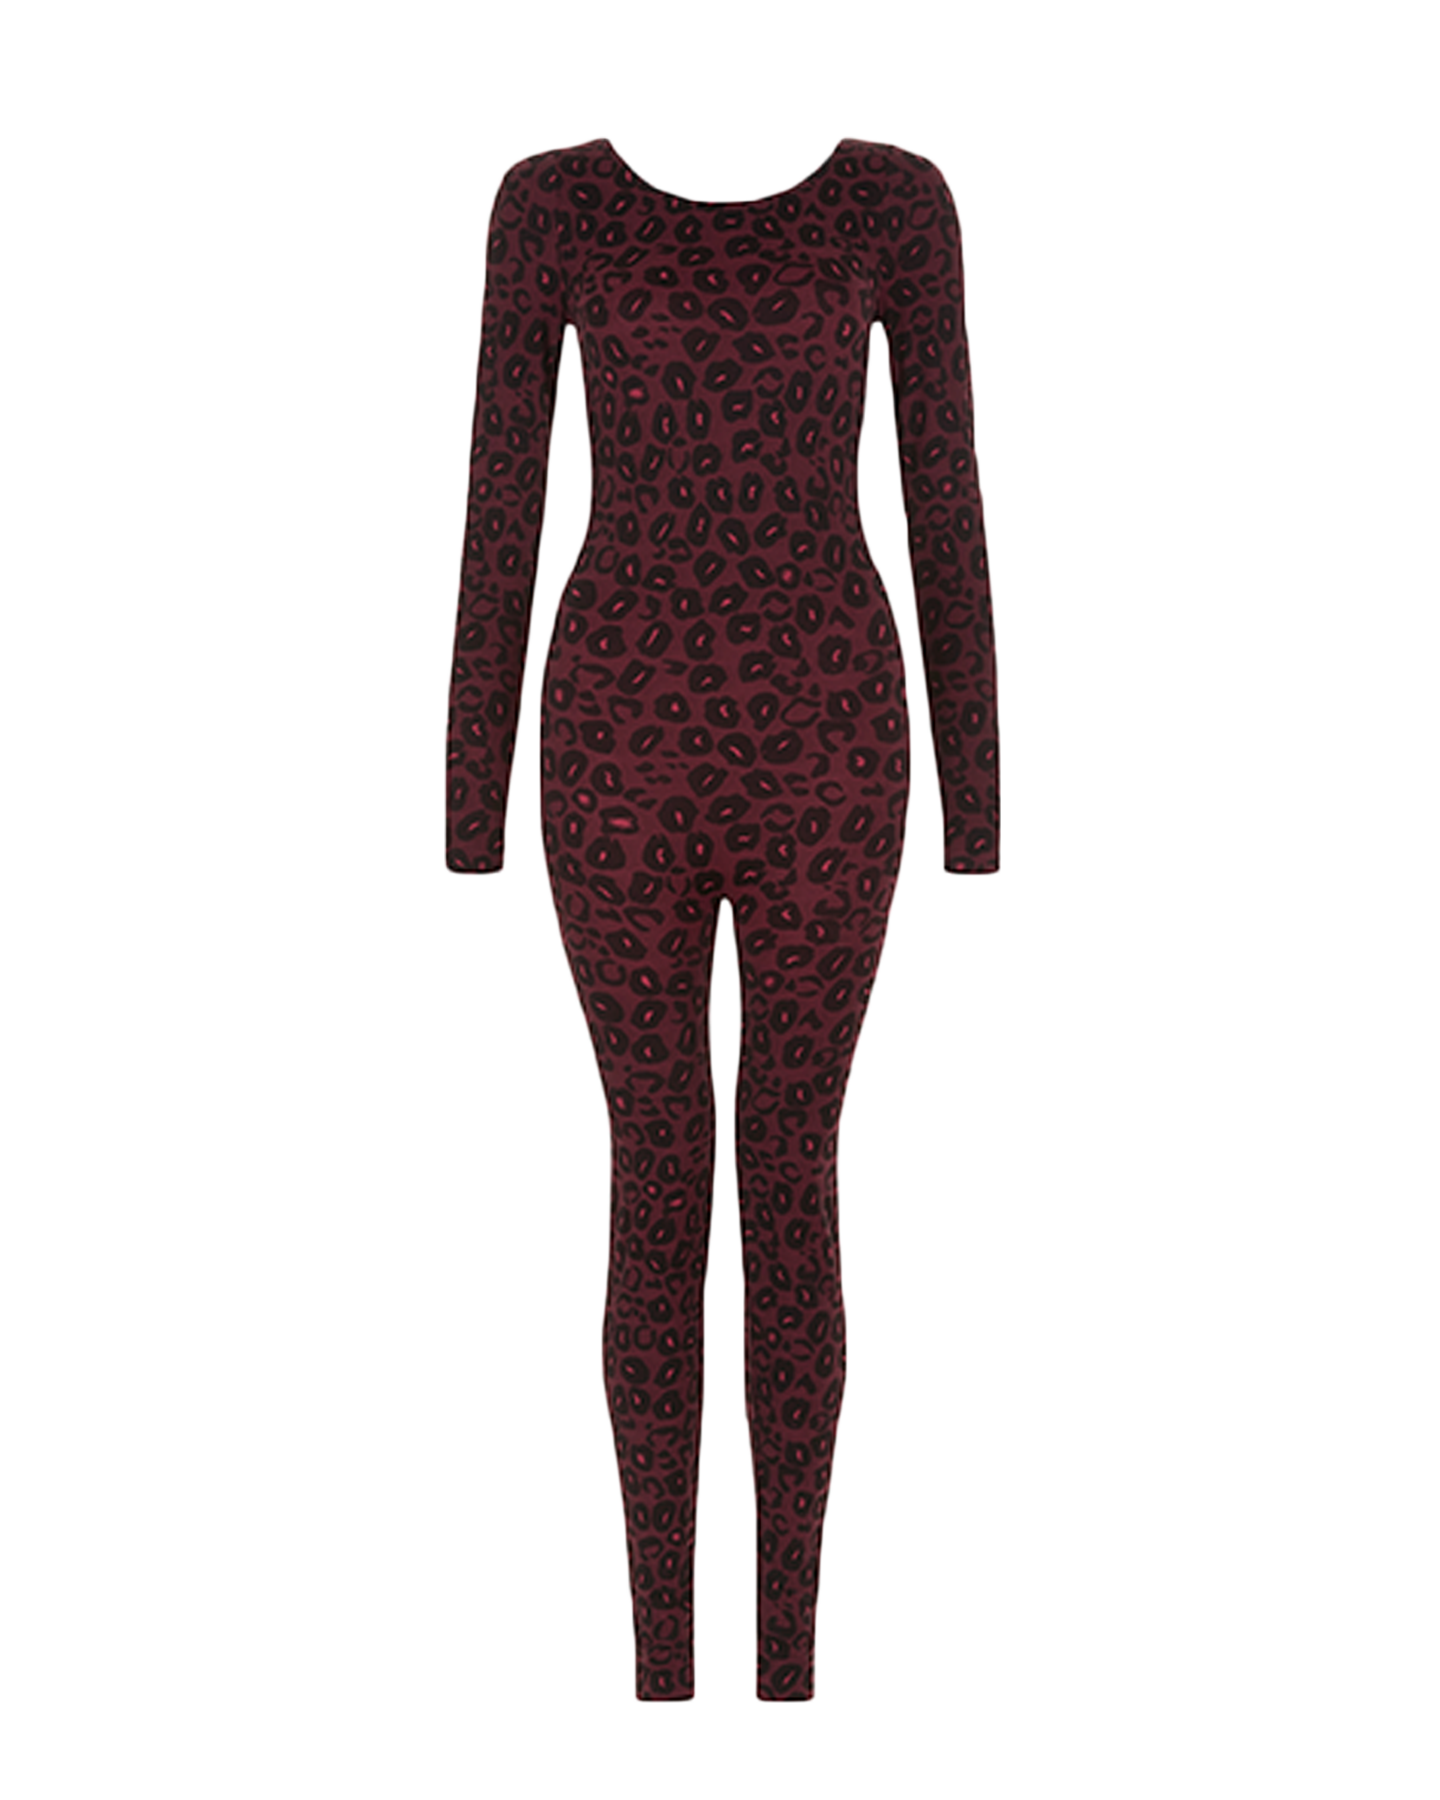 Felinda Jumpsuit in Red/Black | By Agent Provocateur patest